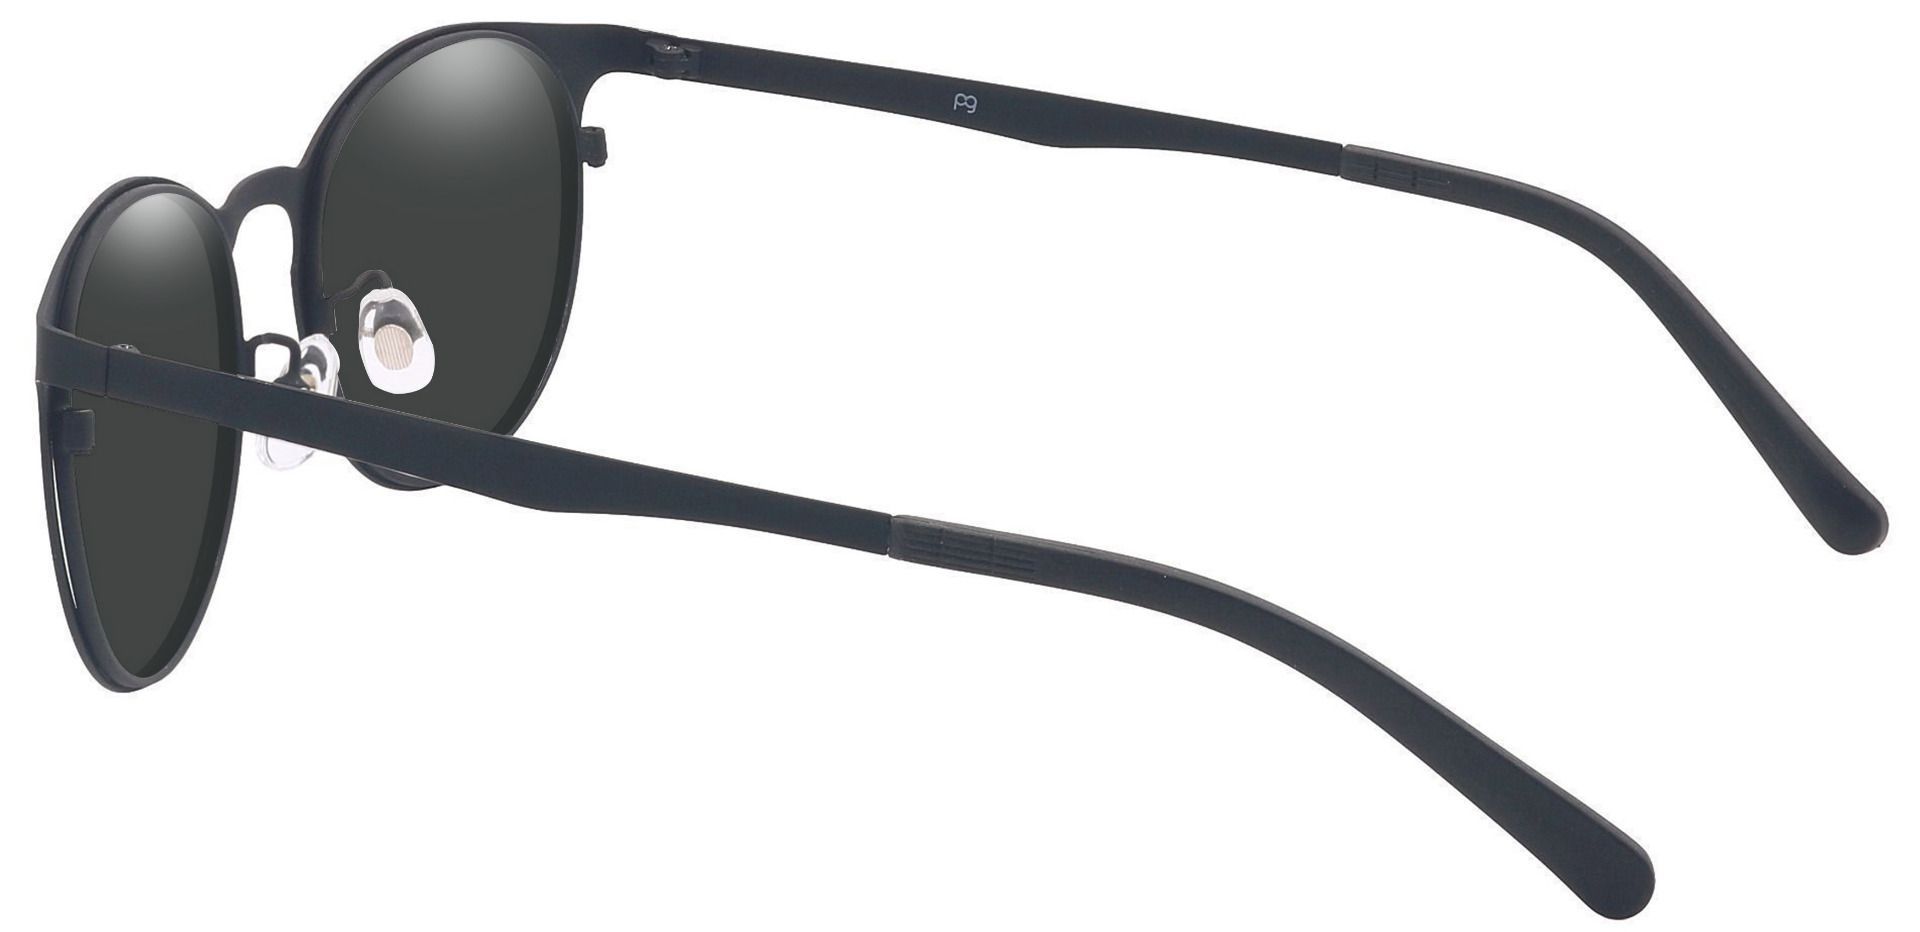 Wallace Oval Progressive Sunglasses - Black Frame With Gray Lenses